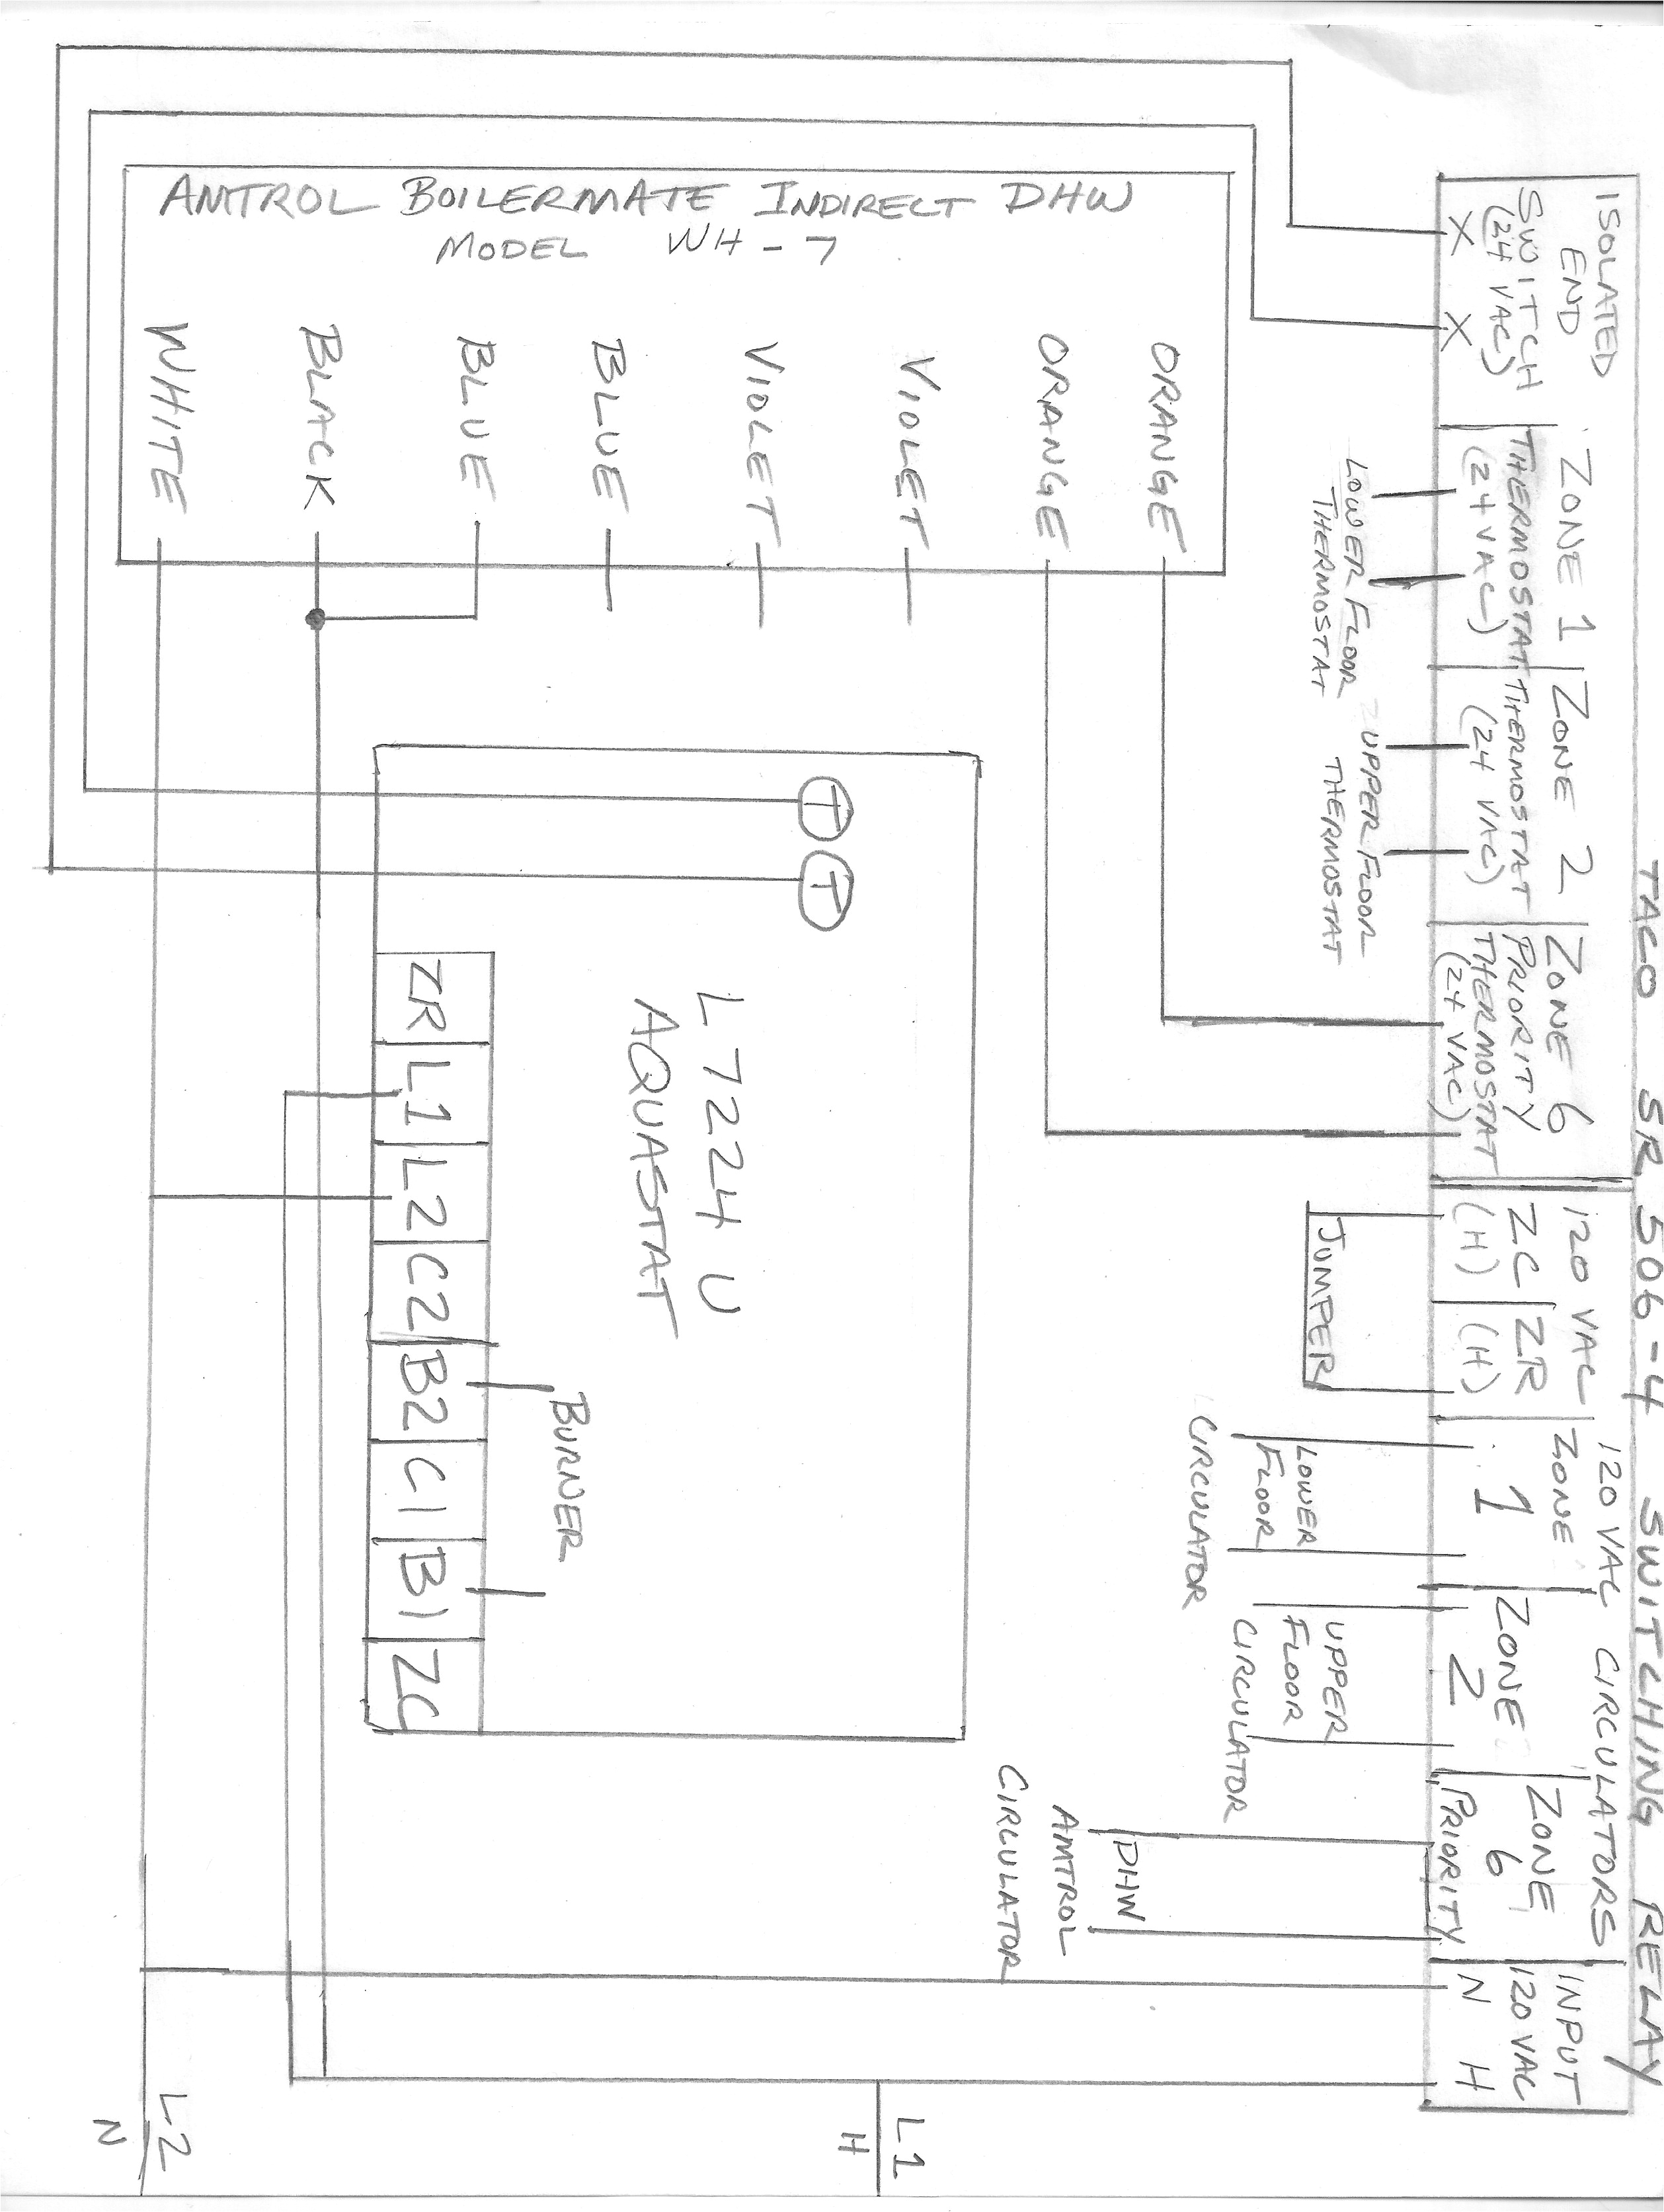 taco sr506 4 switching relay amtrol wh 7 l7224u aquastat prioritydiagram 1 jpeg diagram